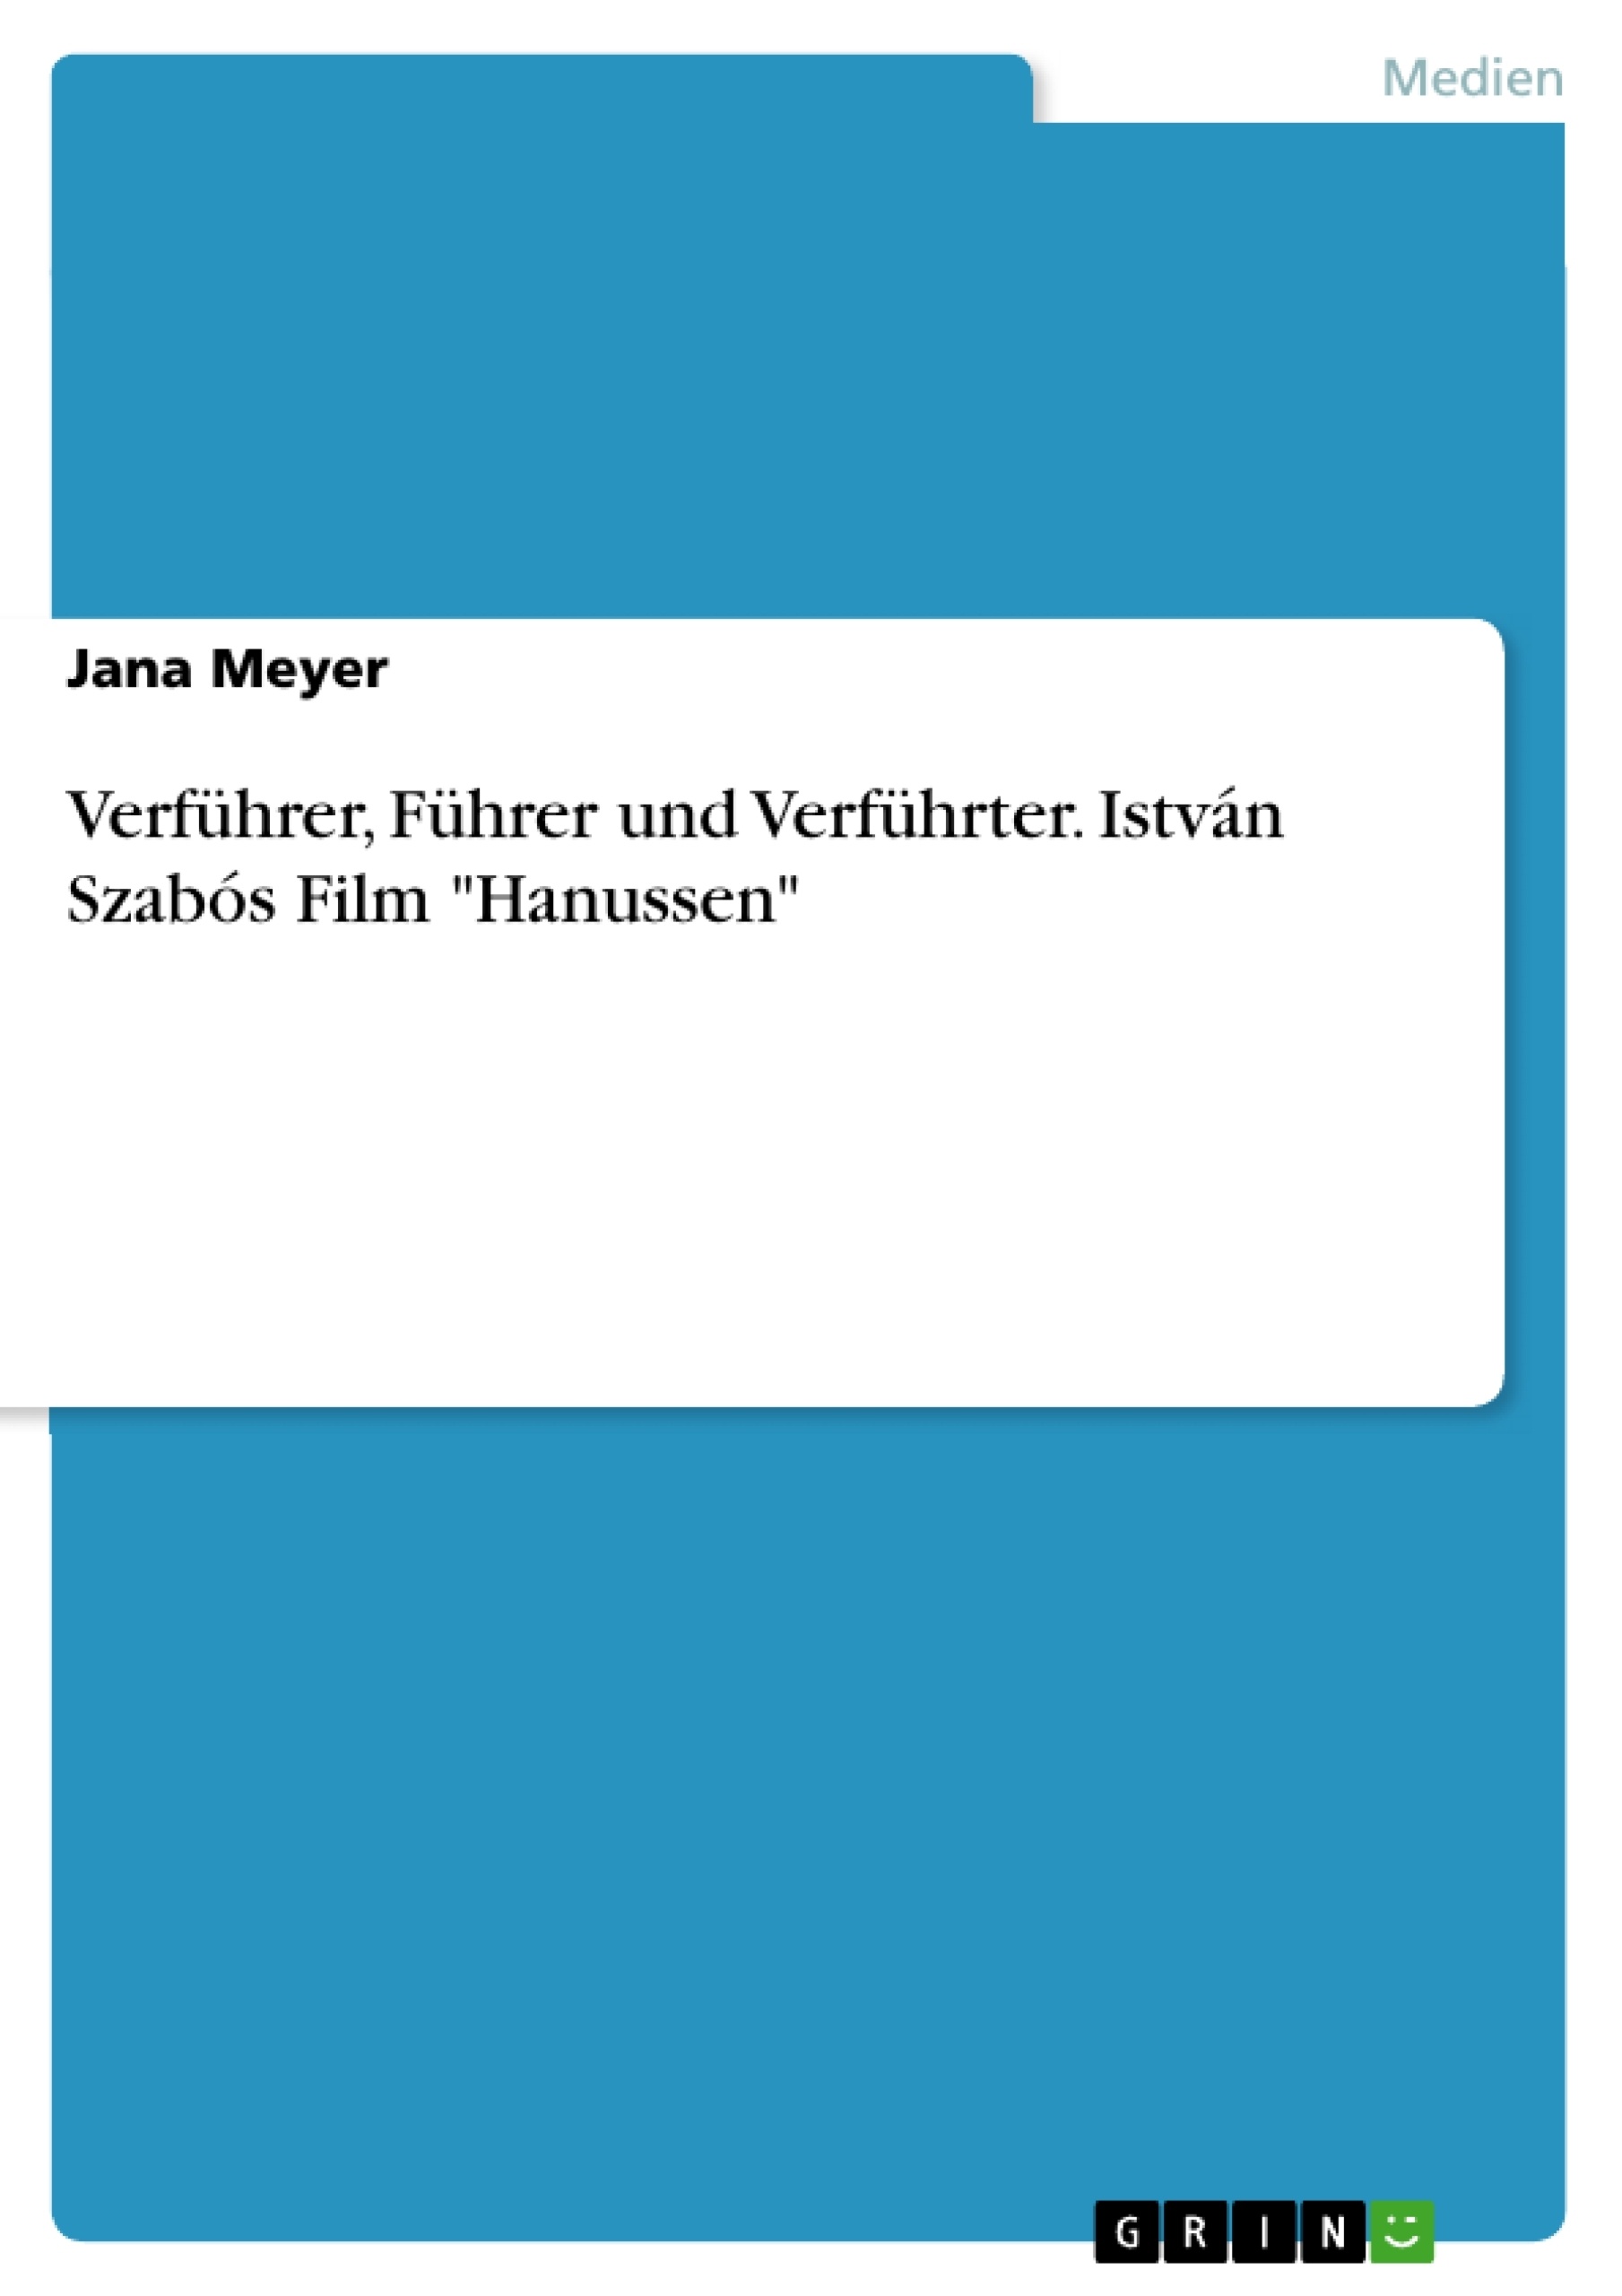 Titre: Verführer, Führer und Verführter. István Szabós Film "Hanussen"